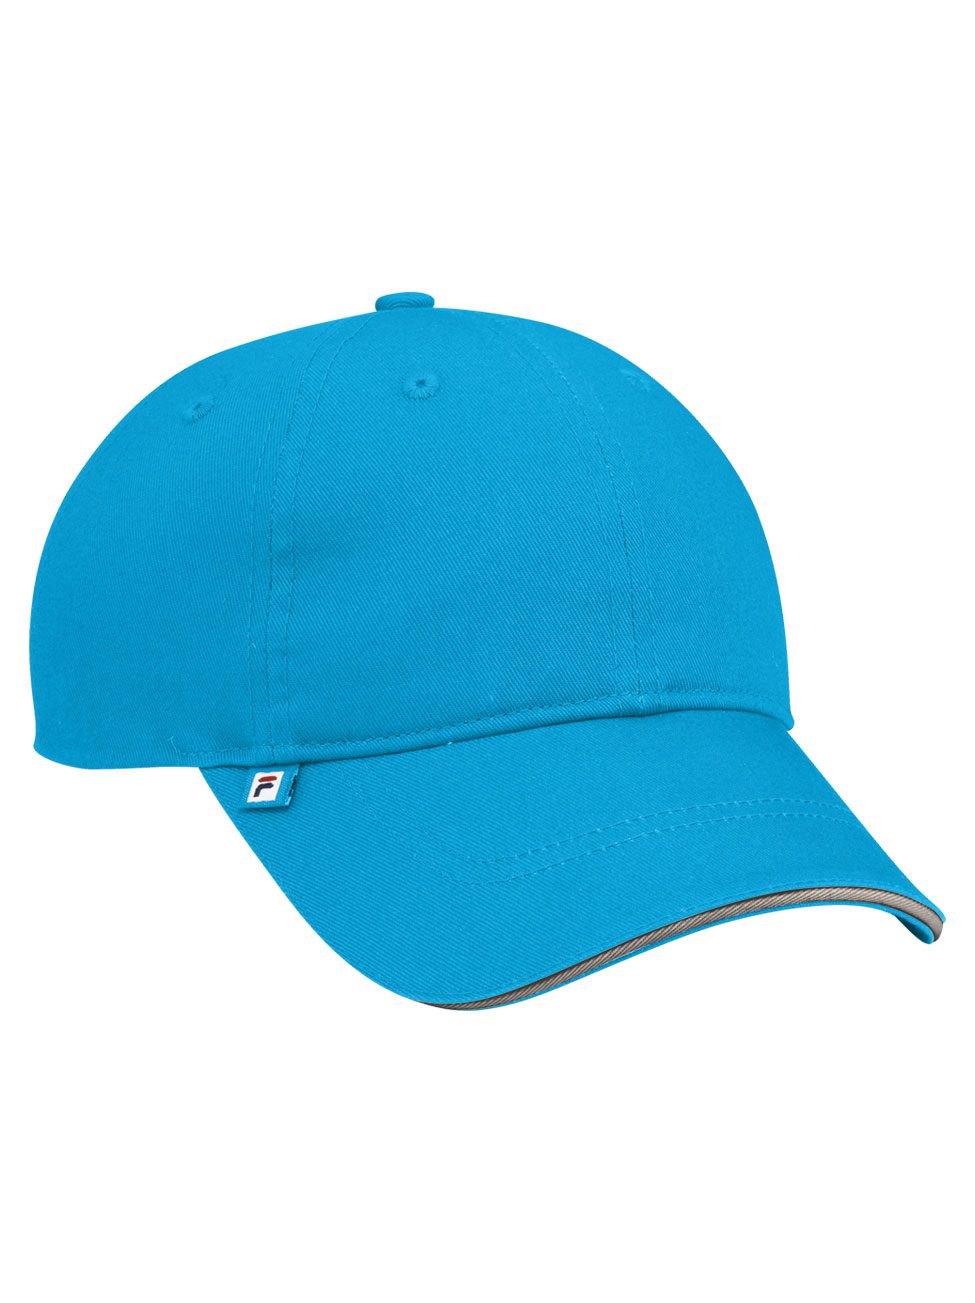 Fila Torino Baseball Hat #FA1010 Aqua Blue